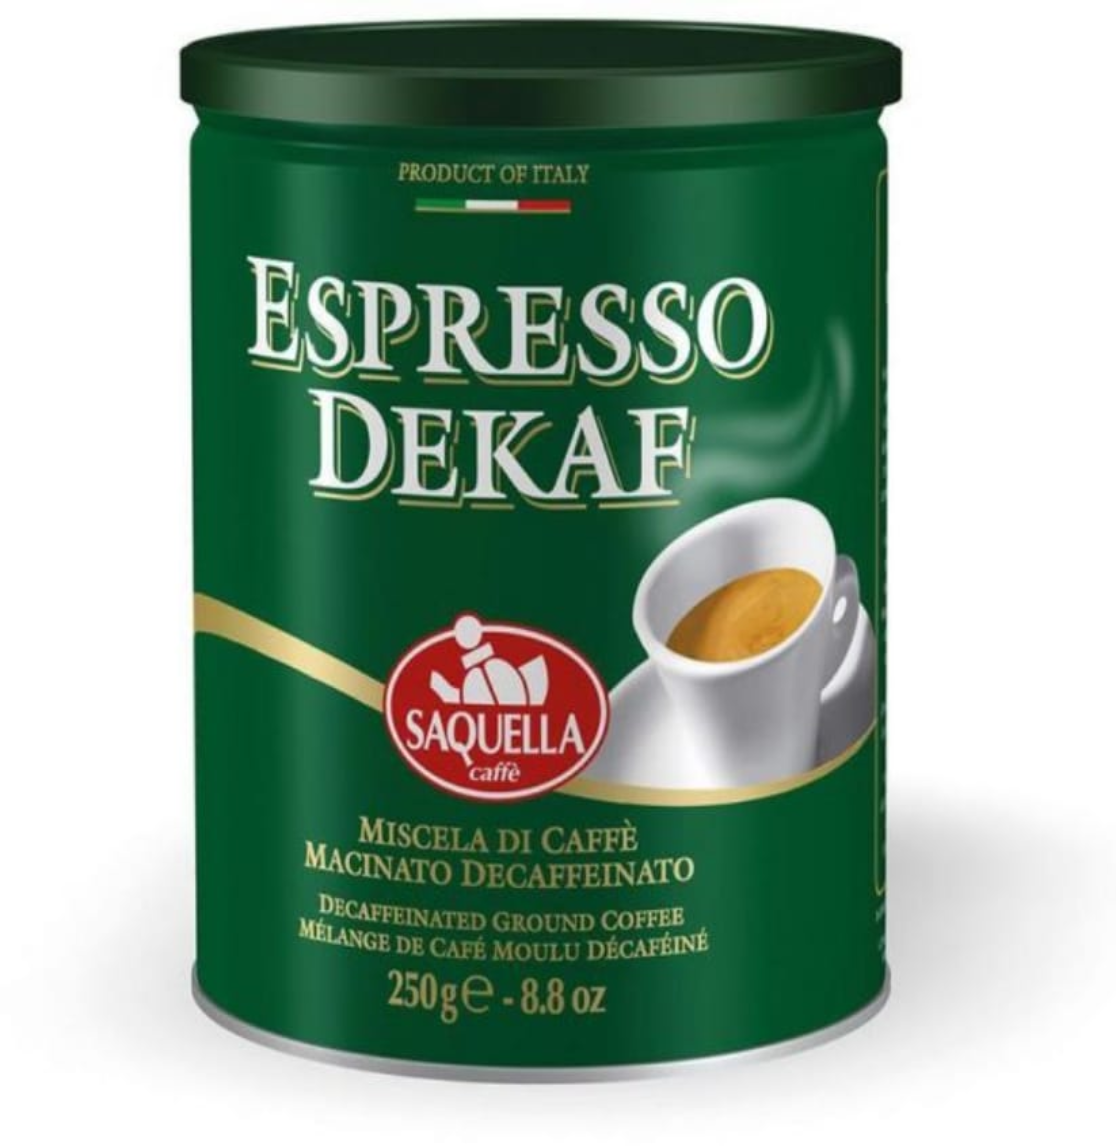 Saquella Espresso Dekaf - Grounded